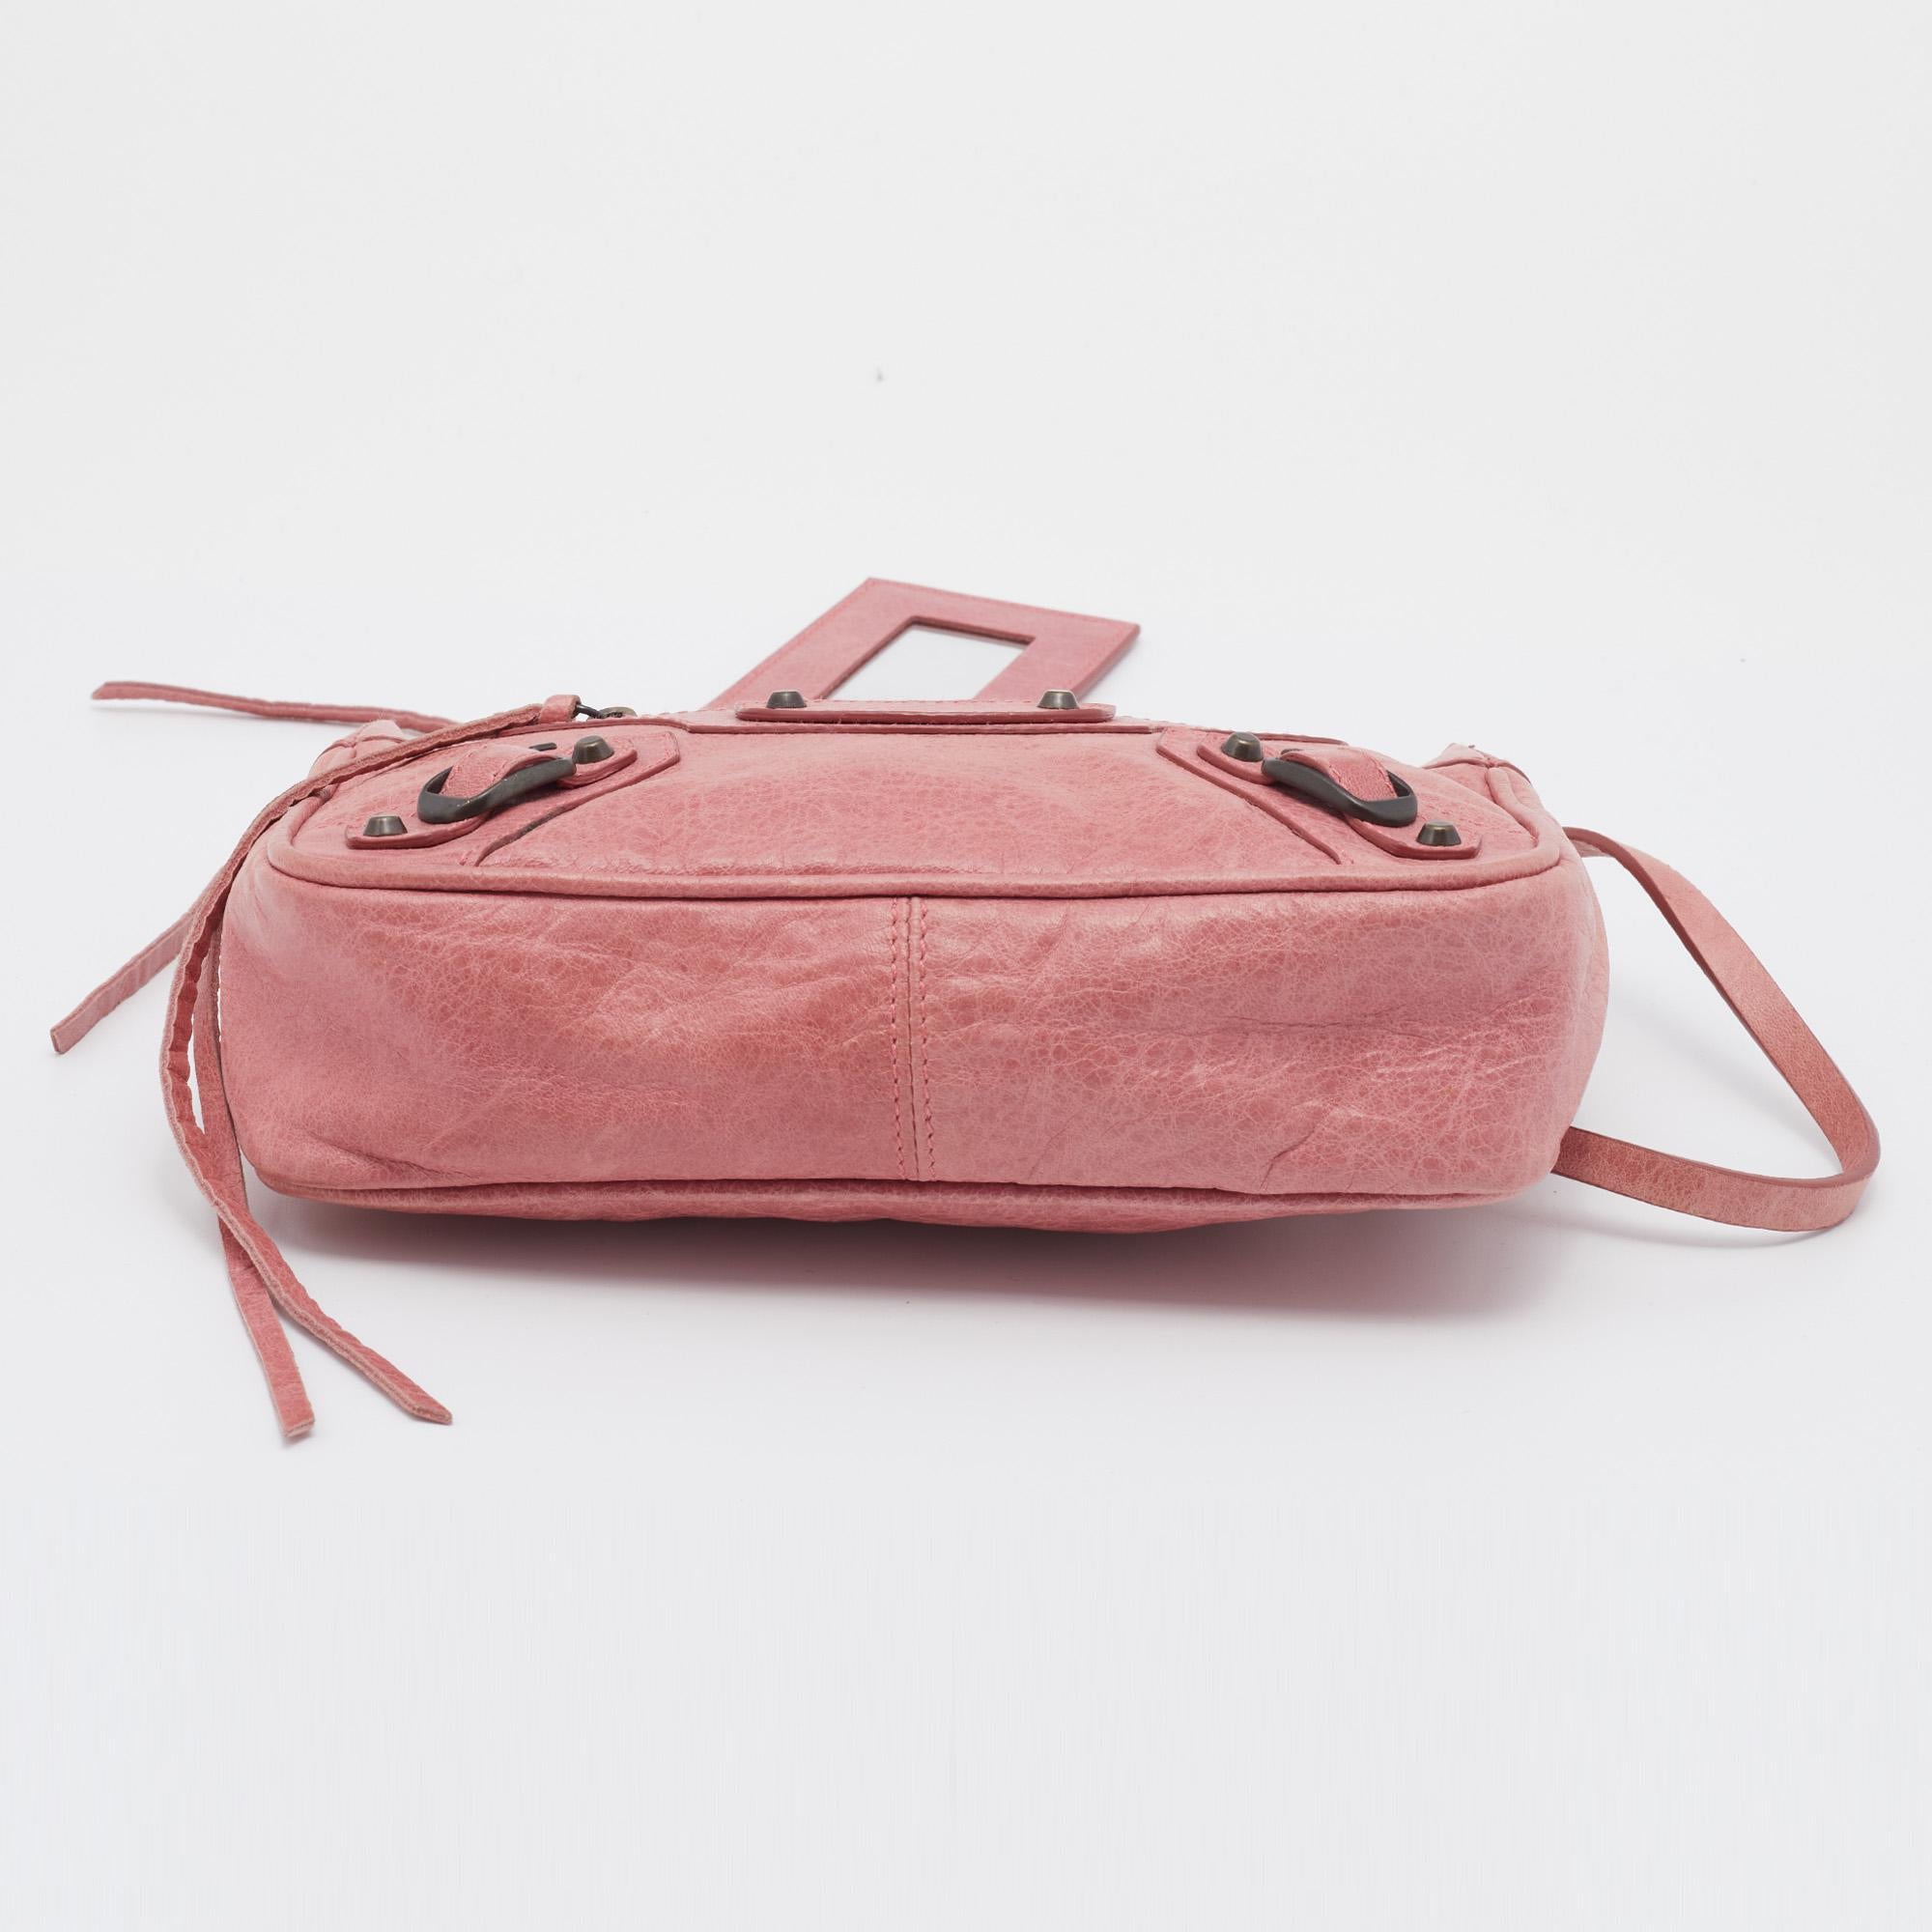 Balenciaga Pink Leather Classic Hardware Shoulder Bag 1